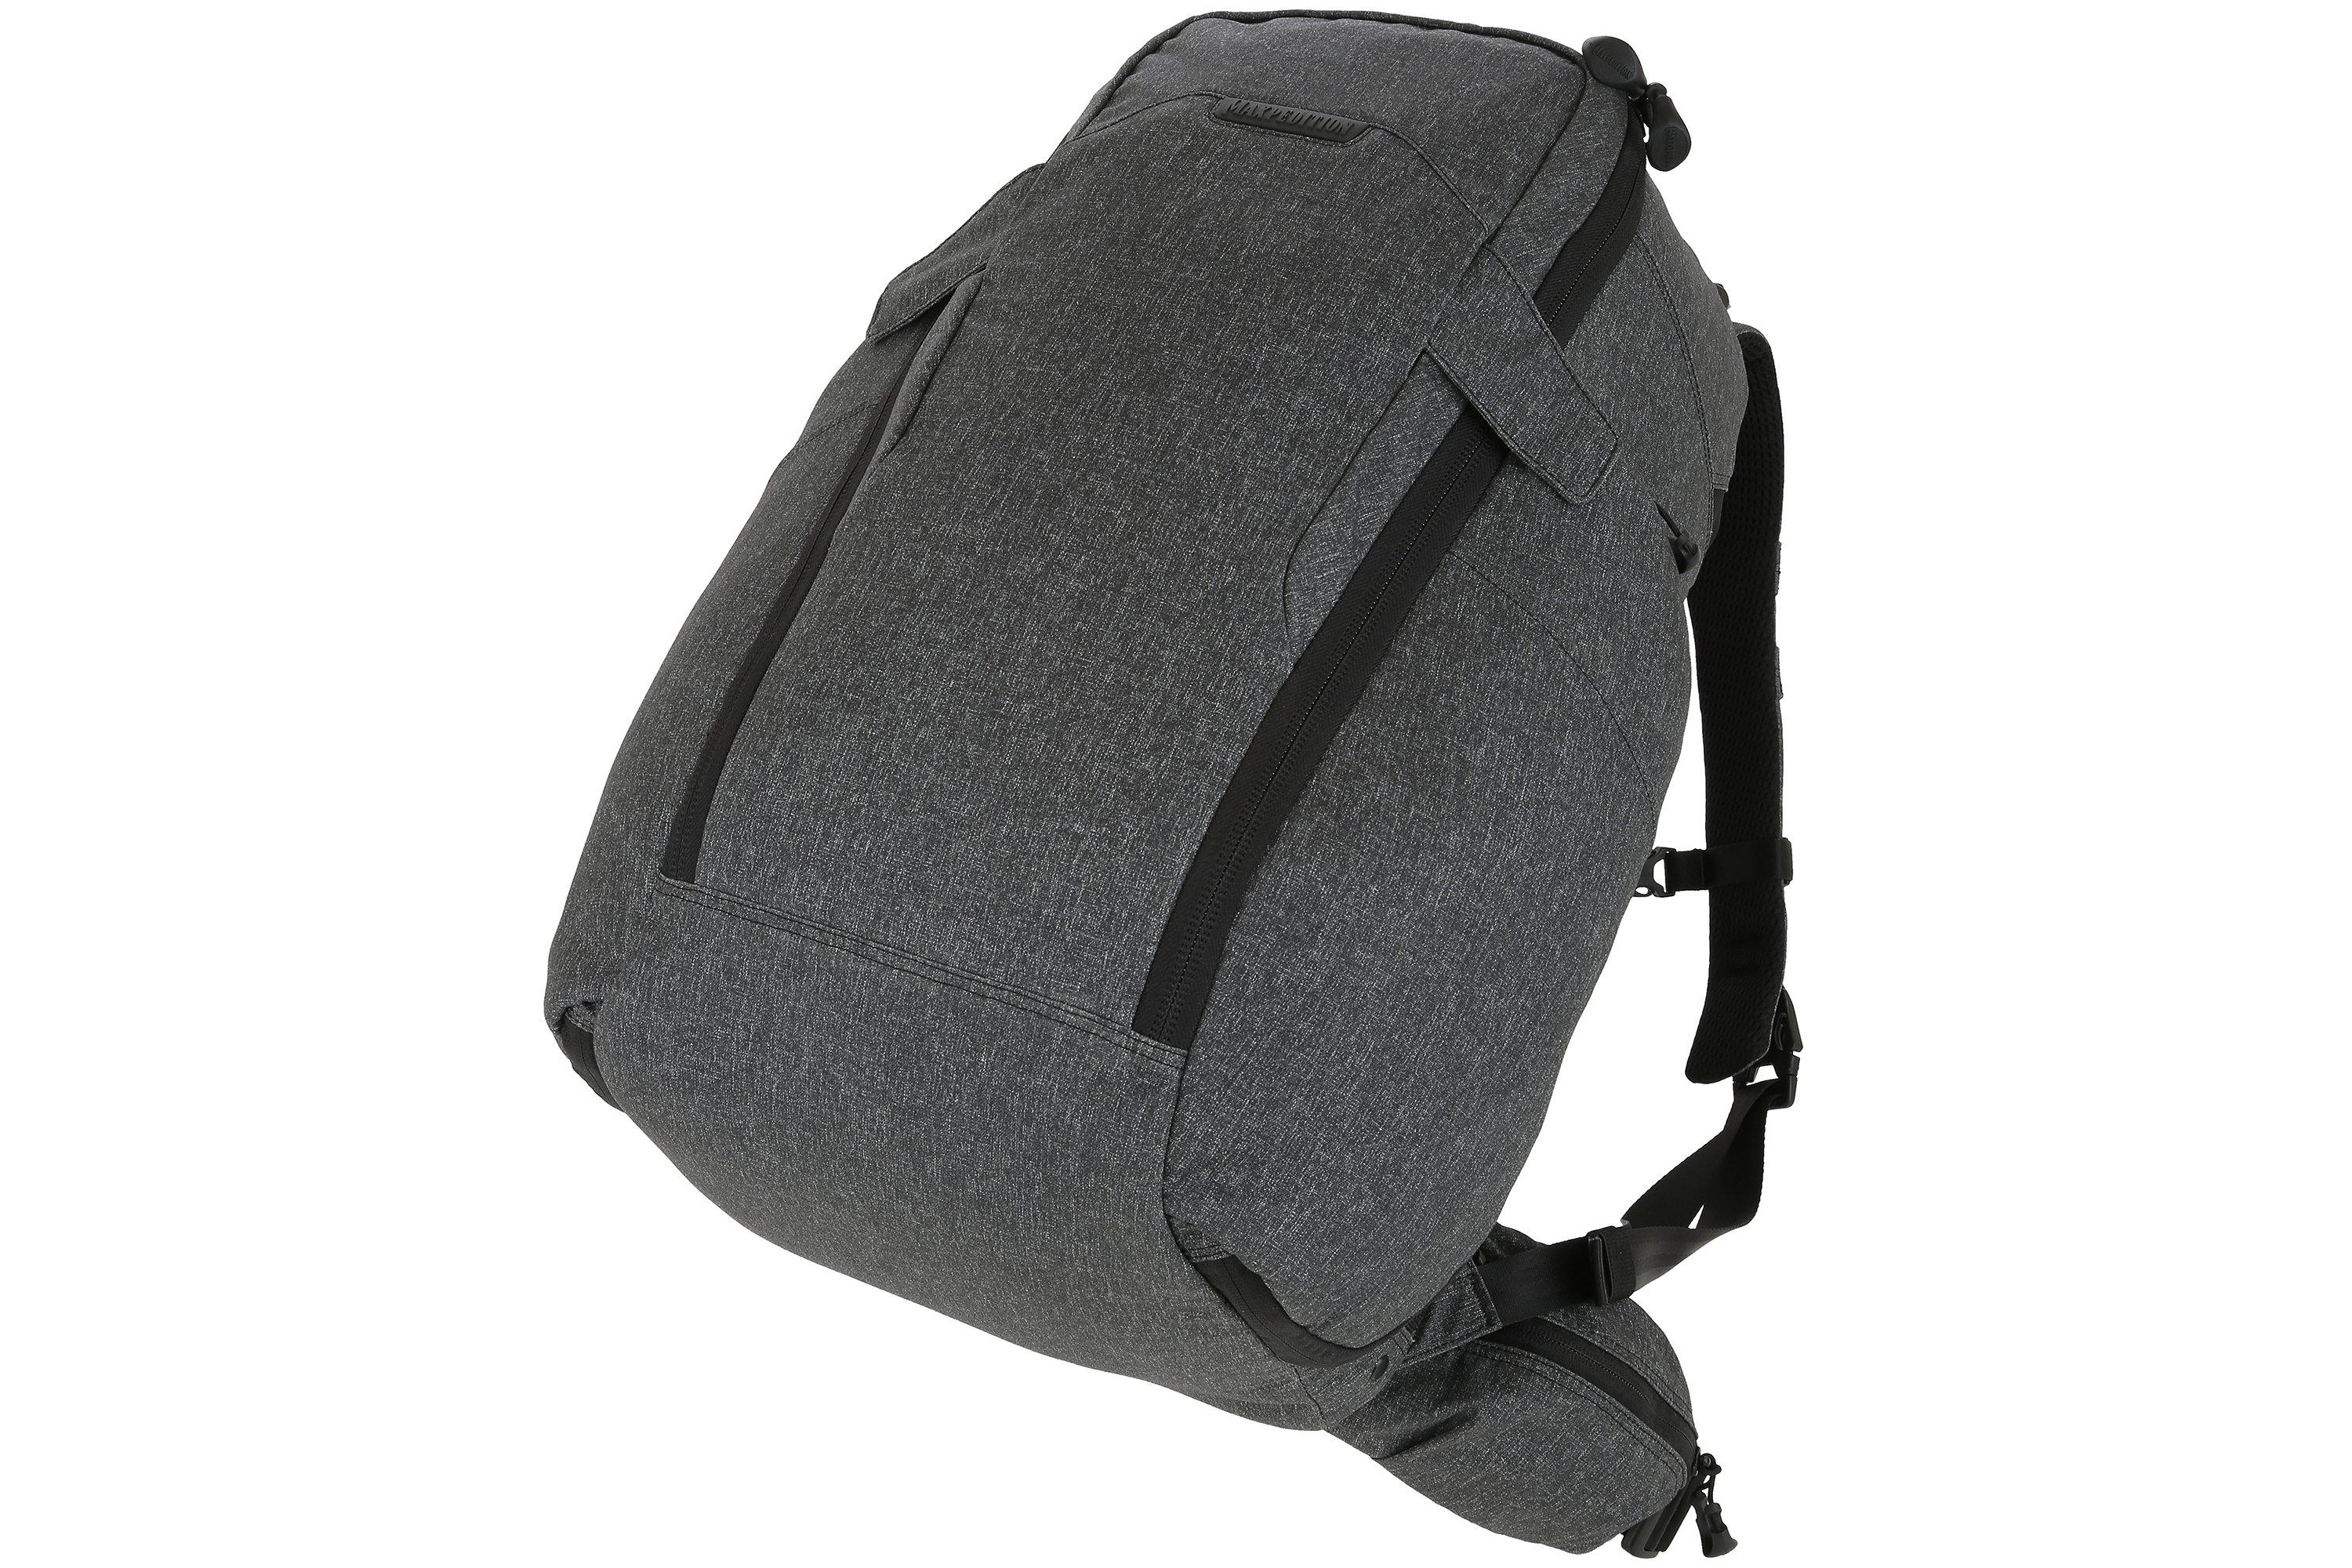 Maxpedition Entity 35 EDC backpack 35L NTTPK35CH Advantageously shopping  at